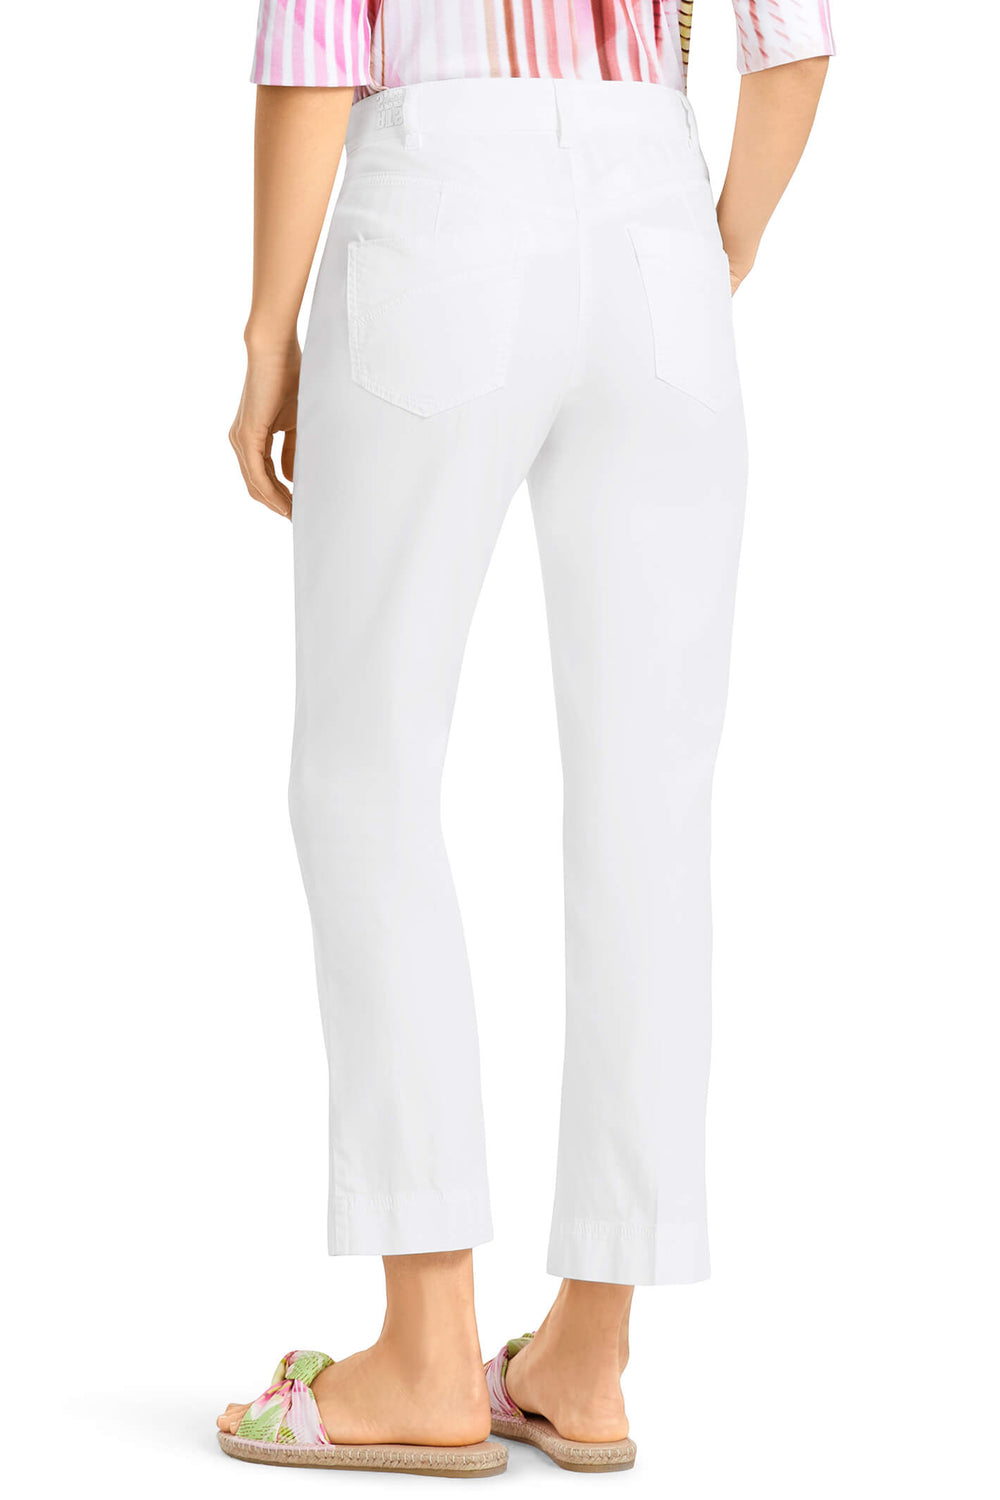 Marc Cain Sports US 81.43 W62 100 White Trousers - Olivia Grace Fashion